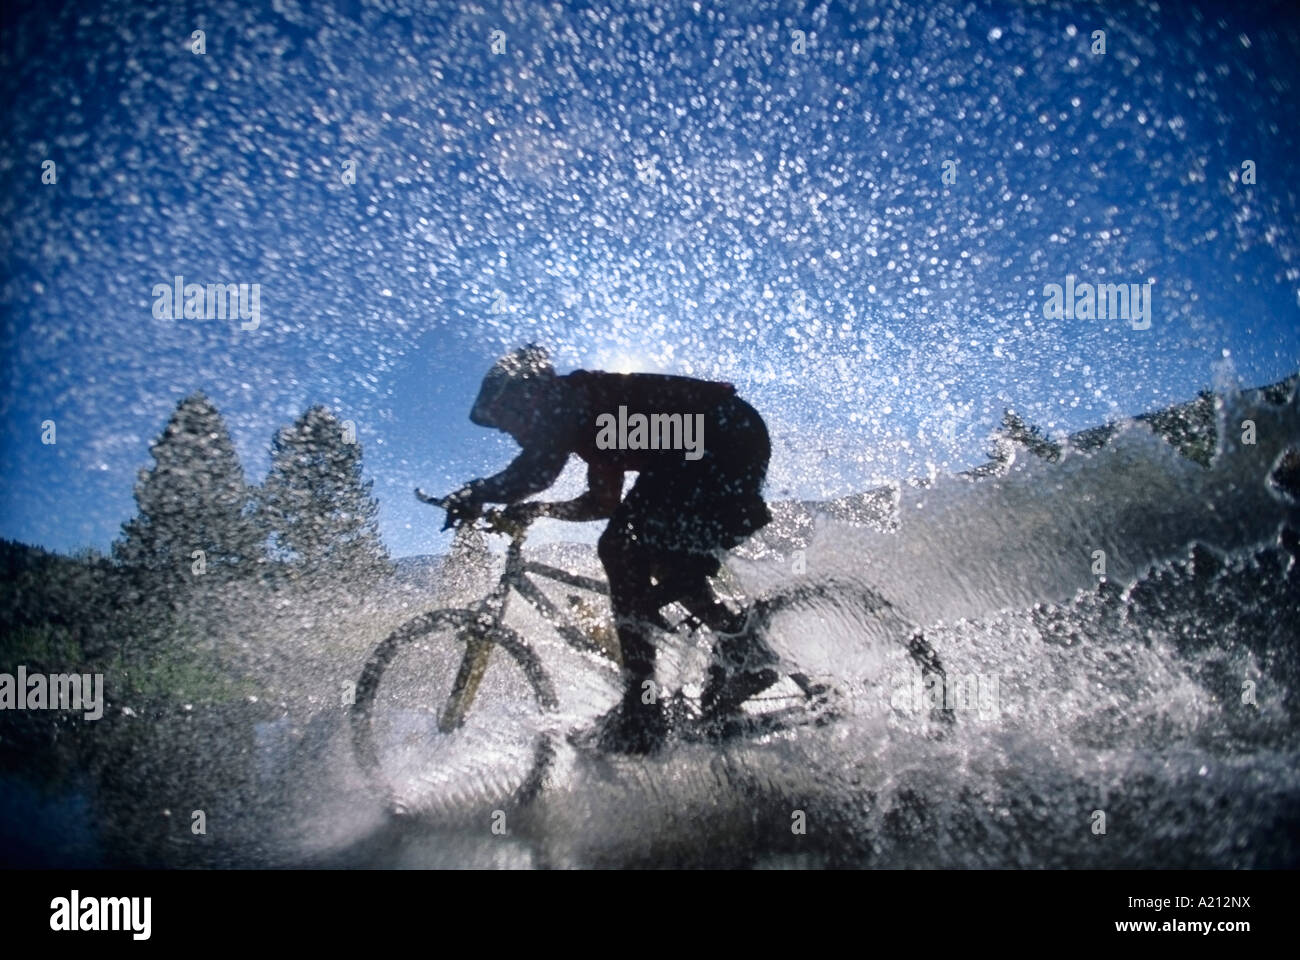 Mountain Bicyclist Splashing Through Water, side view Stock Photo